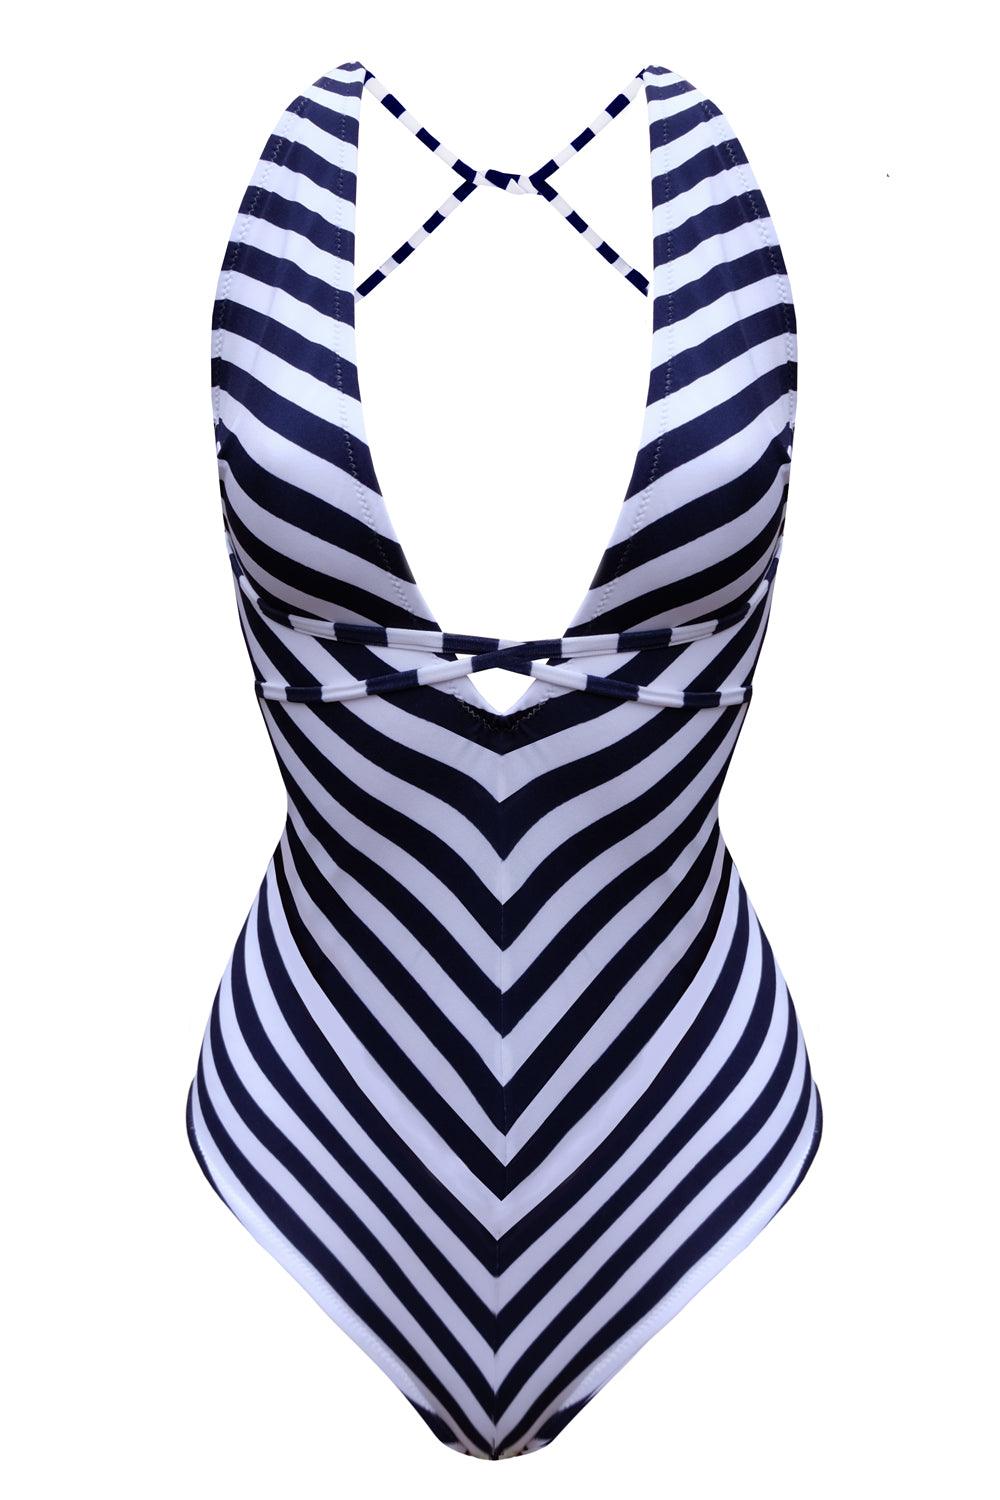 Seashelly swimsuit - One Piece swimsuit by yesUndress. Shop on yesUndress